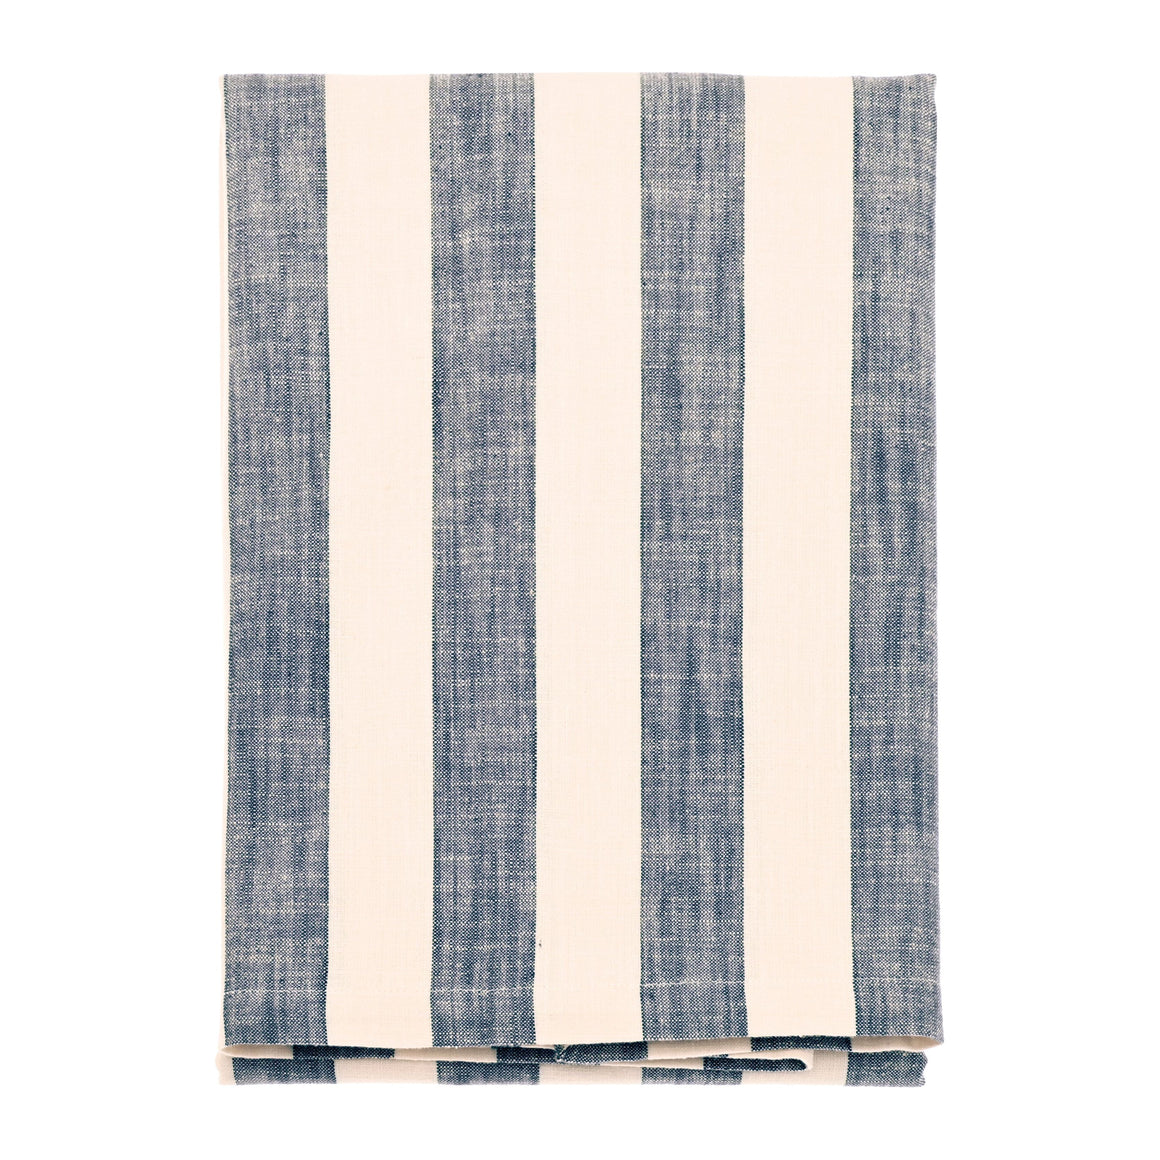 Walton & Co Flint Blue Wide Stripe Tablecloth - All Sizes